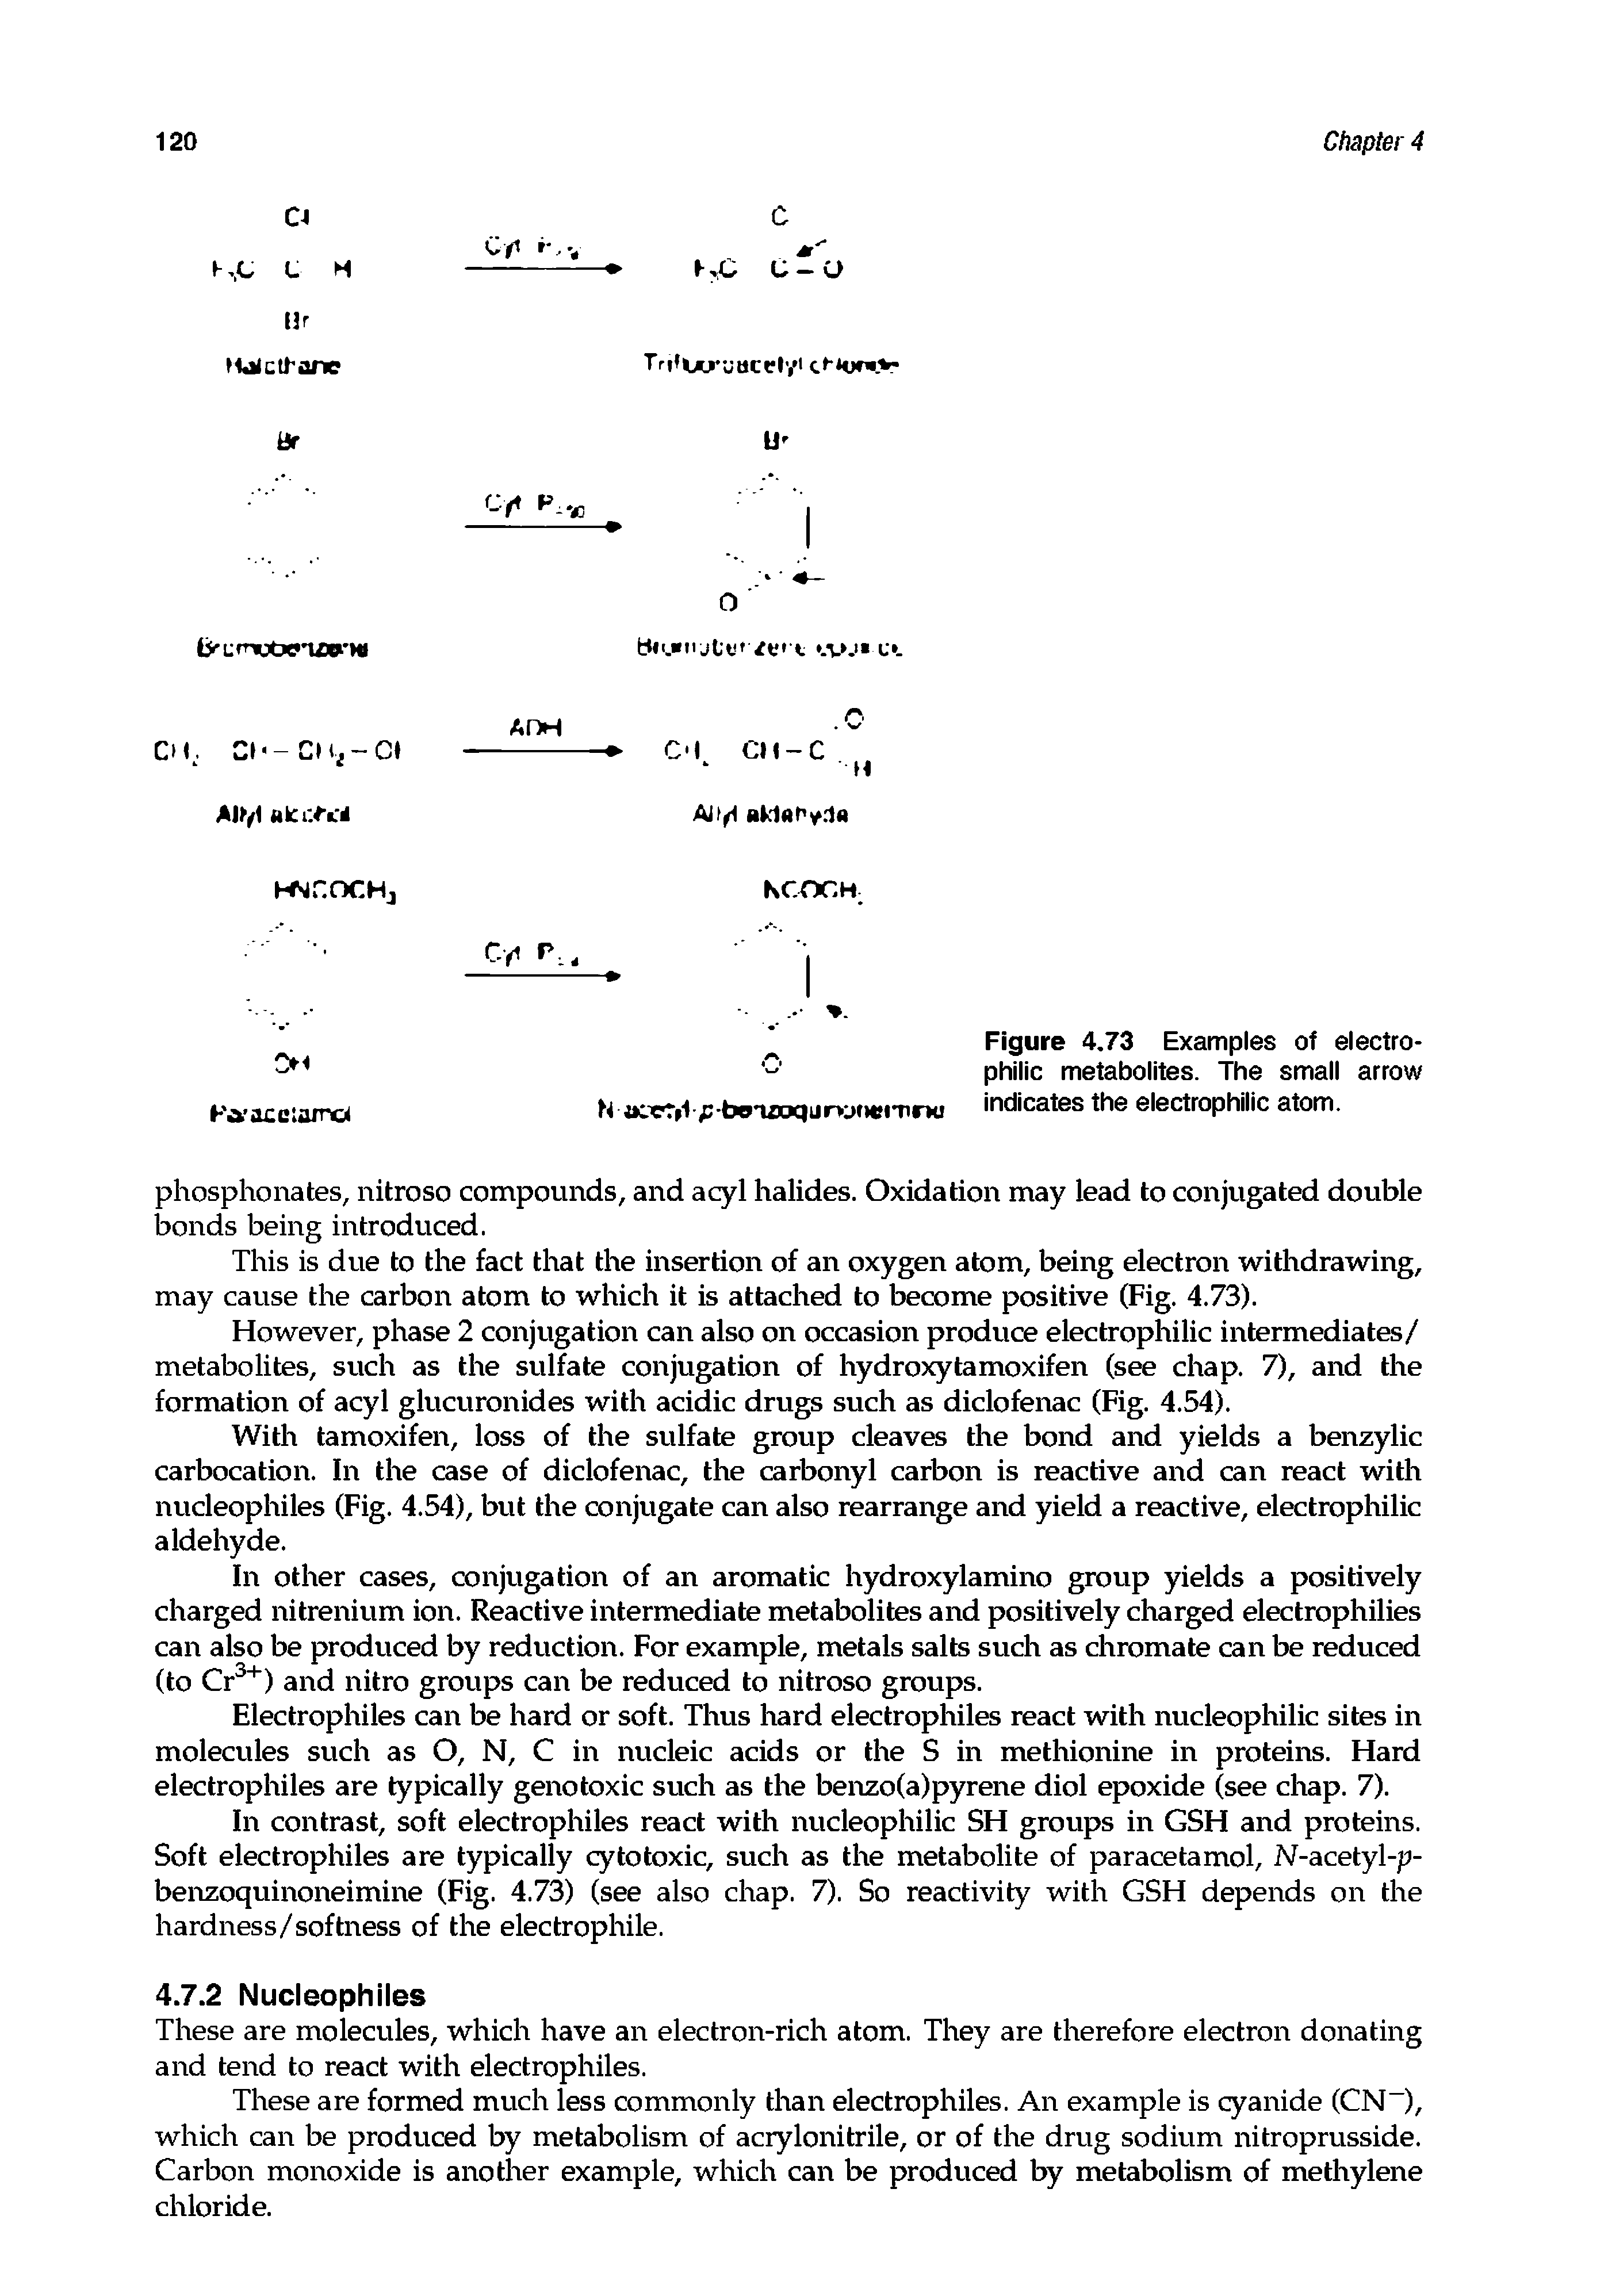 Figure 4.73 Examples of electro-philic metabolites. The small arrow Httxtfip bo-uoqjryjwprw indicates the electrophilic atom.